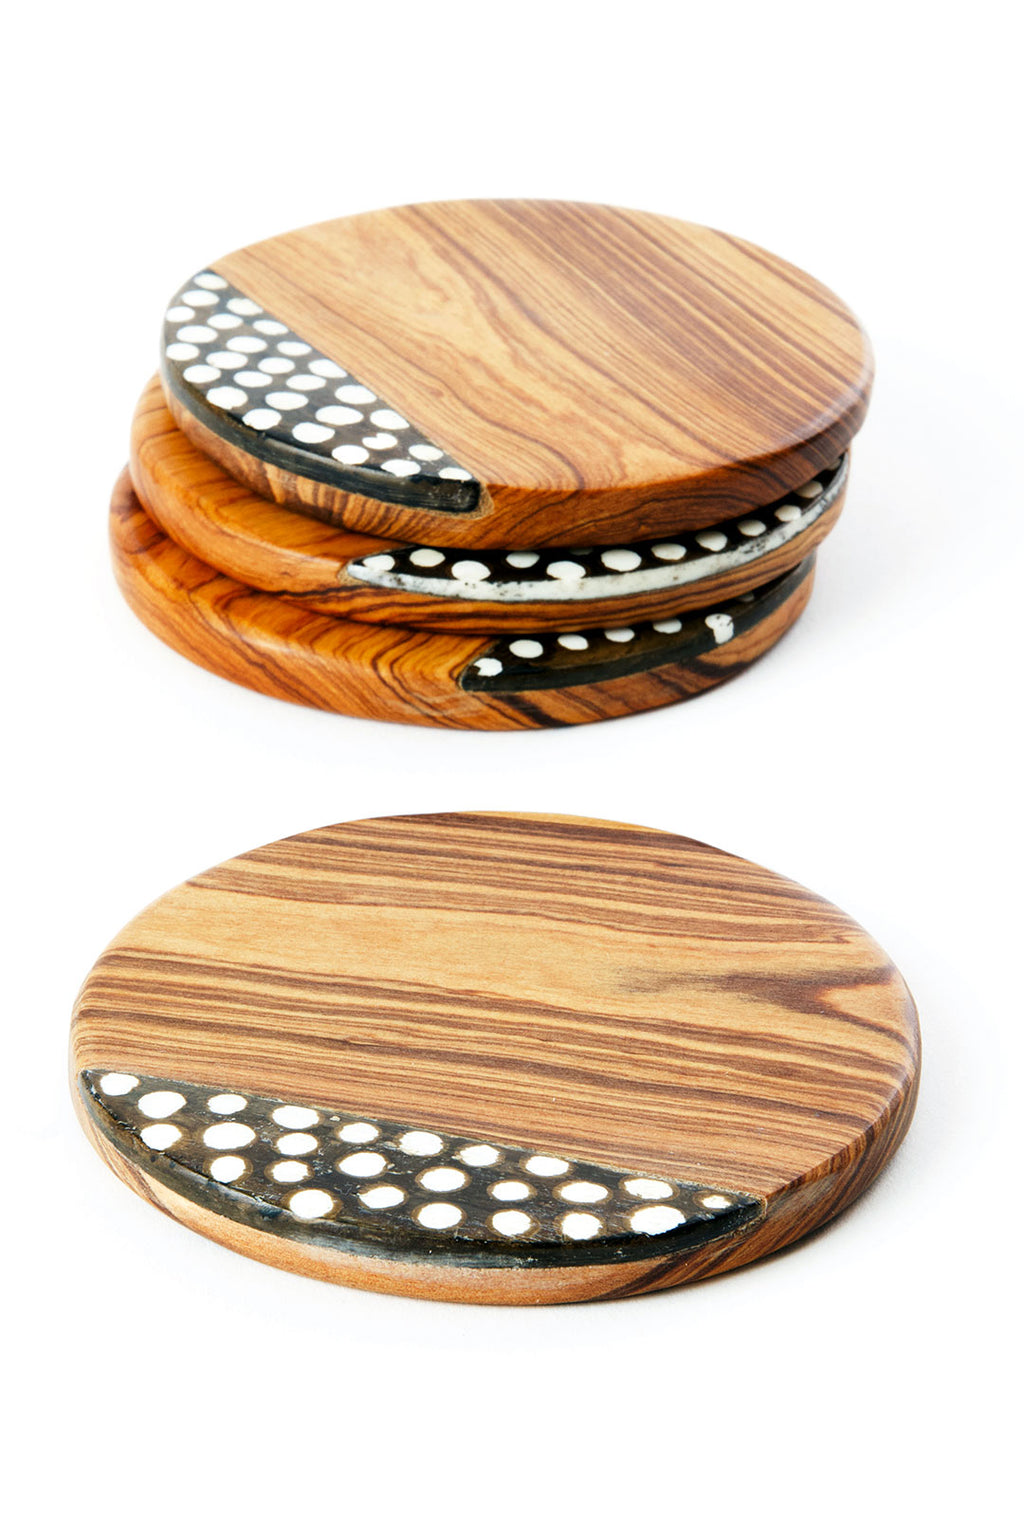 Set of Four Kenyan Wild Olive Wood Coasters with Dyed Bone Inlay